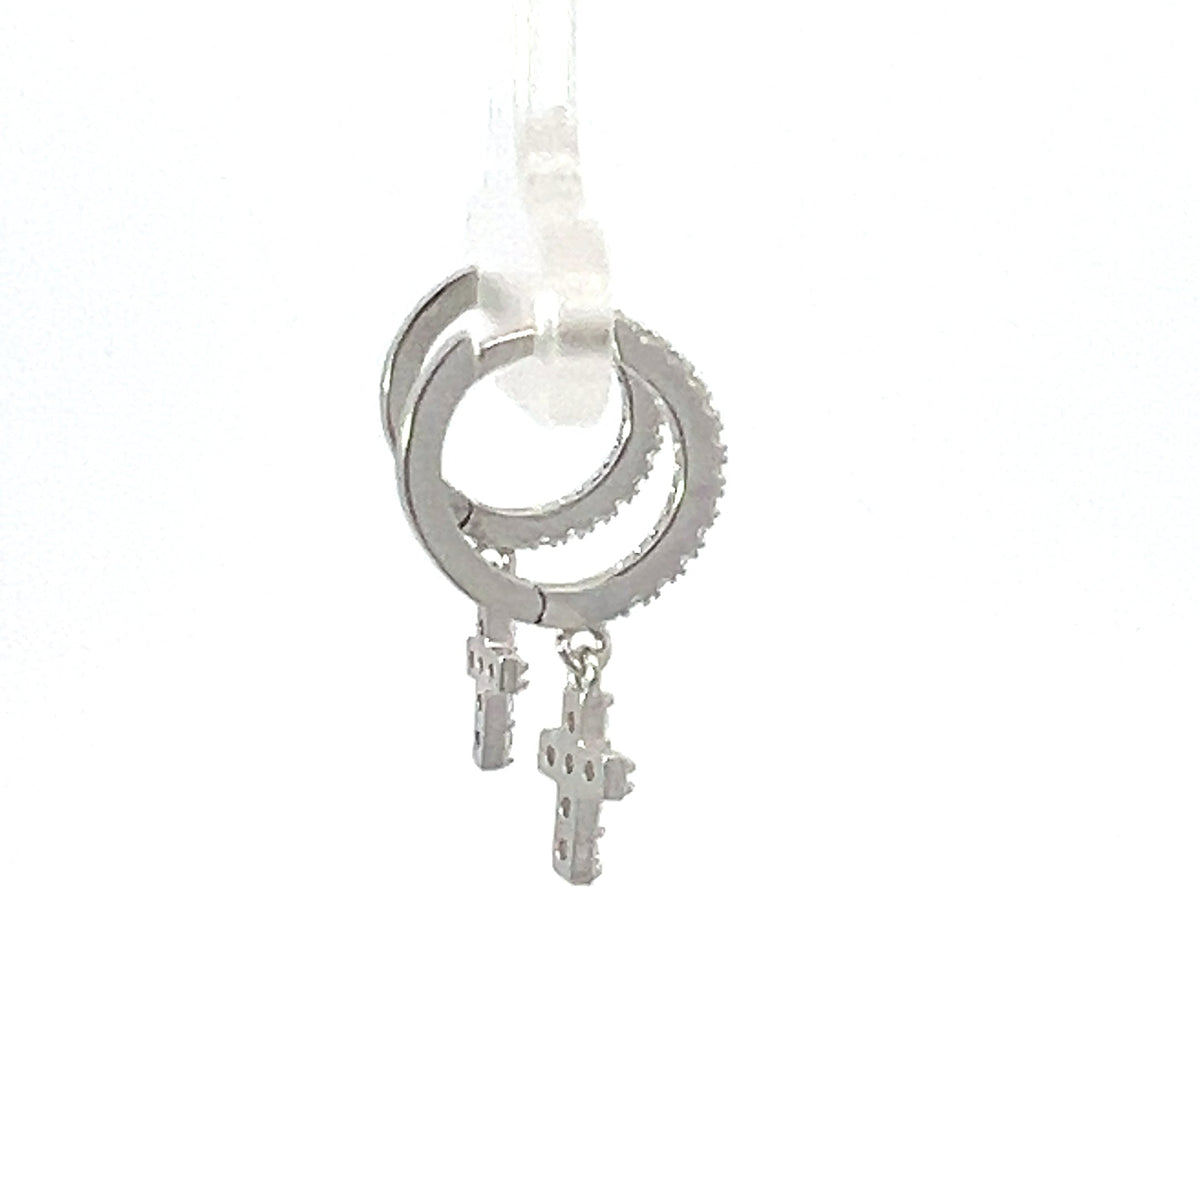 925 Silver Earrings Cubic Zirconia Huggies with Dangling Cross with Cubic Zirconia